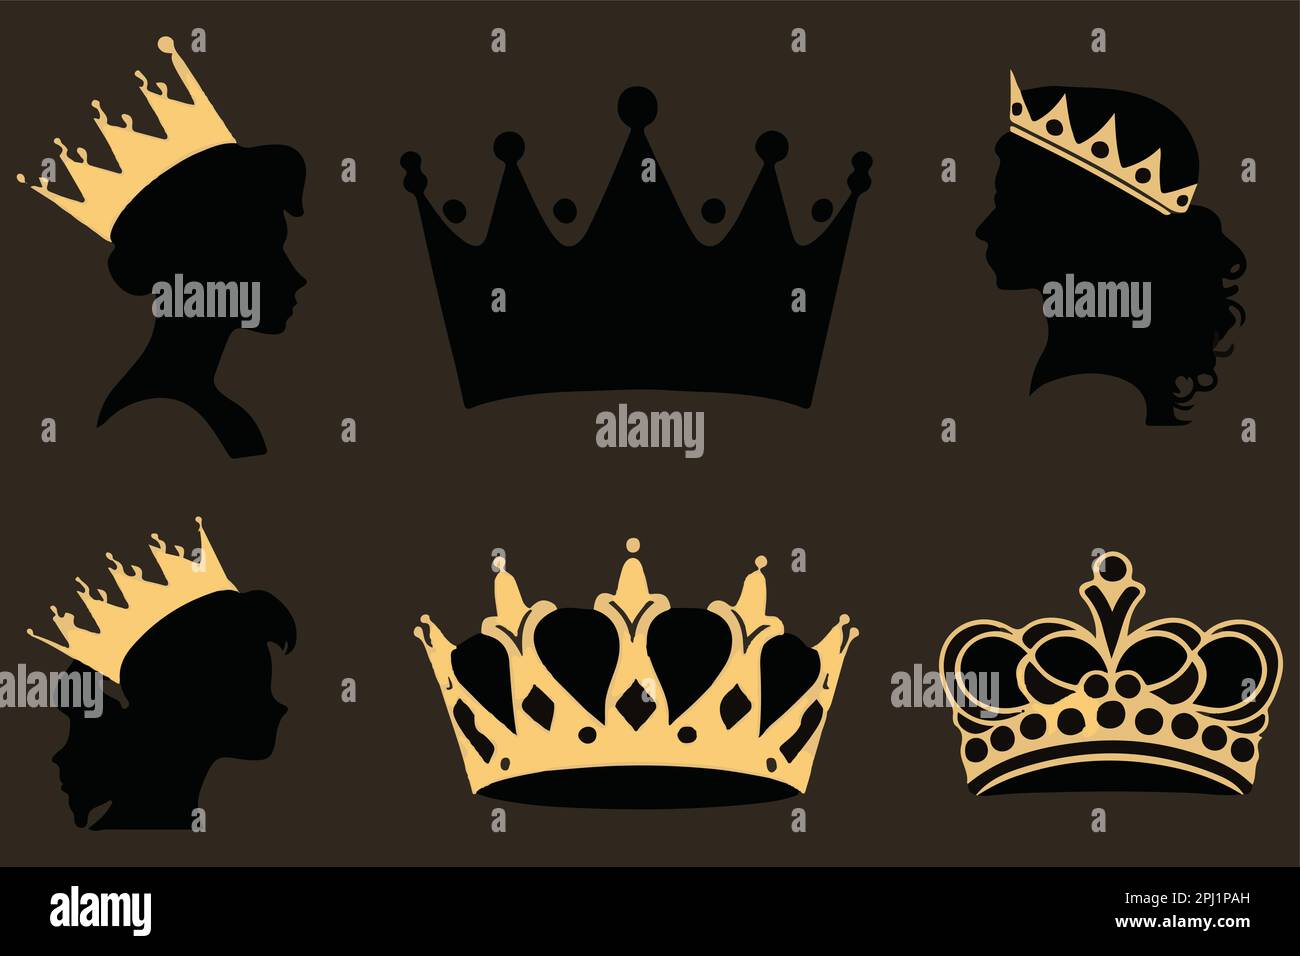 Corona rey fotografías e imágenes de alta resolución - Alamy